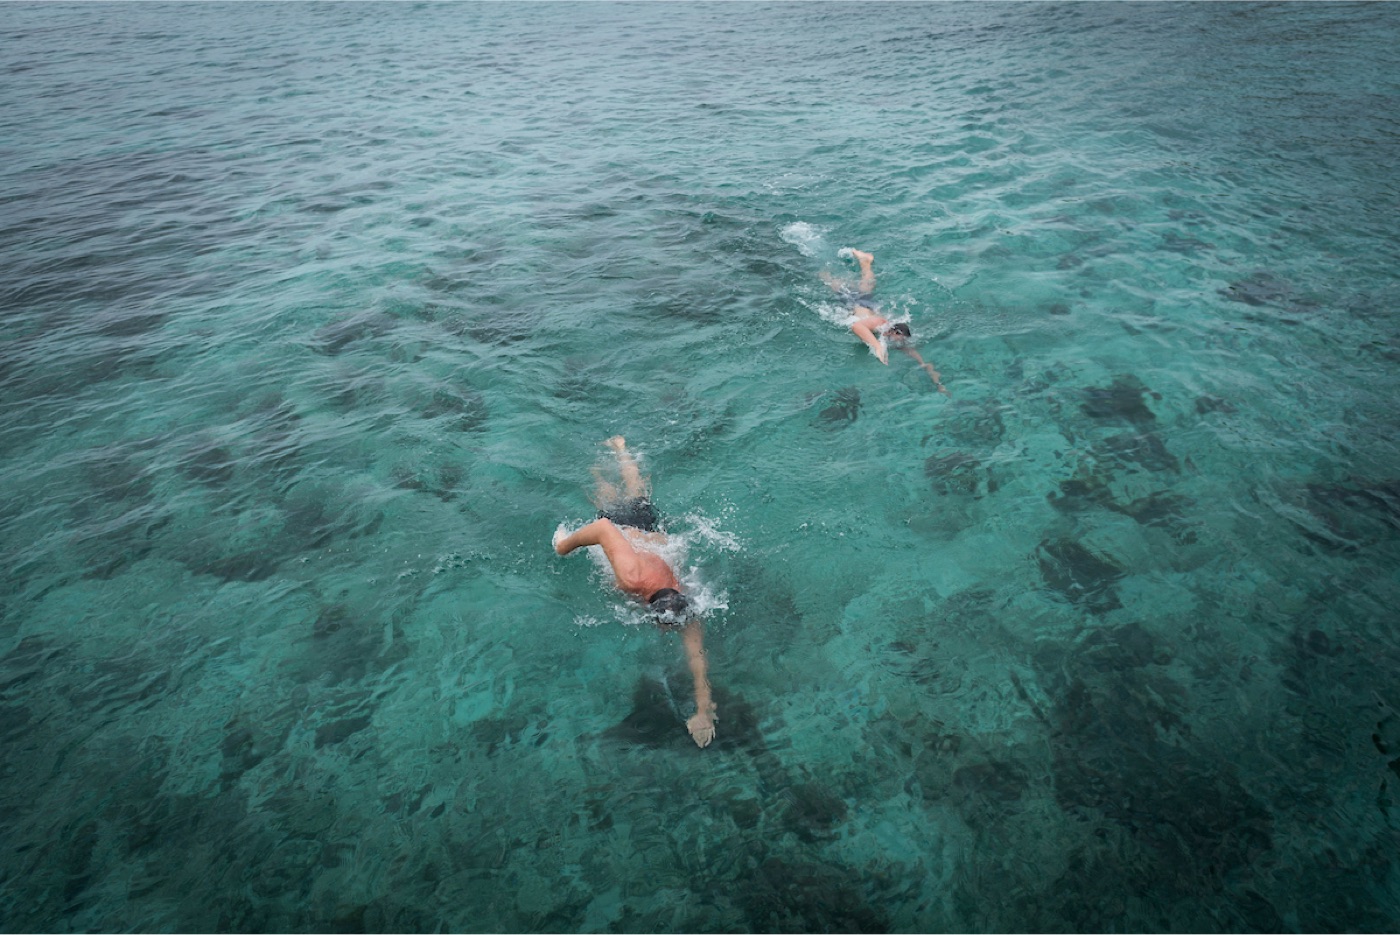 Ocean Swim Fiji - Blog - Shane’s Top Five Favourite Things About Ocean Swim Fiji